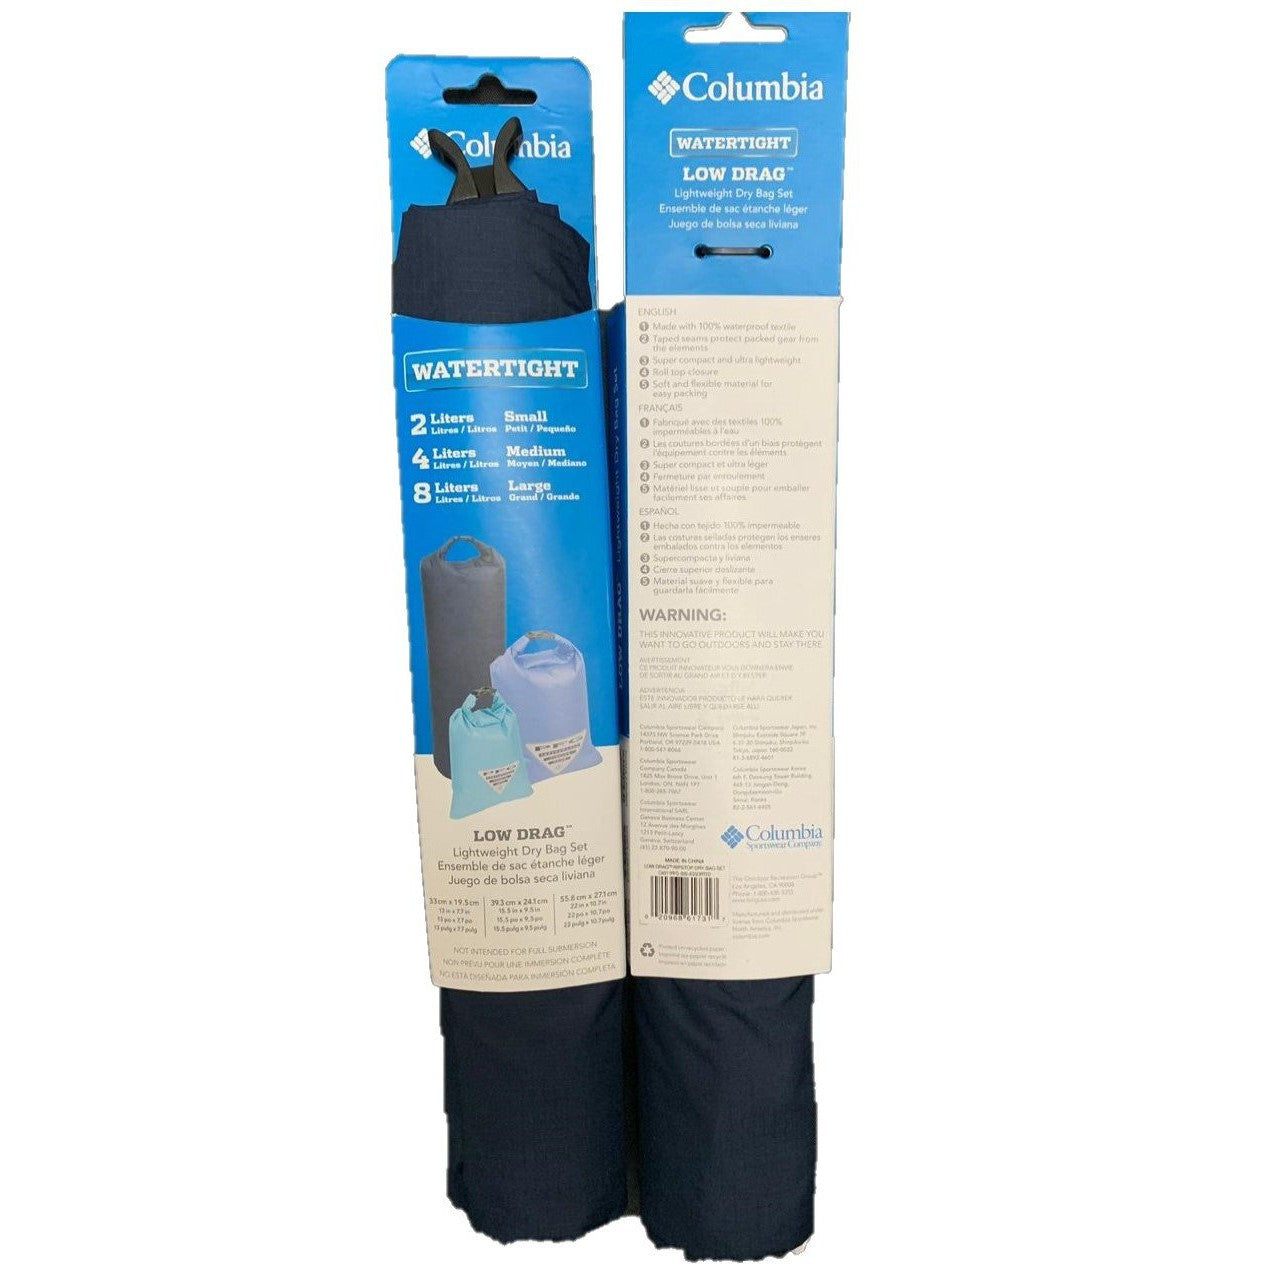 Bolsa seca Columbia PFG (Dry bags) set de 3 unid, colores azul oscuro, lila y celeste. - The Gift Shop Costa Rica